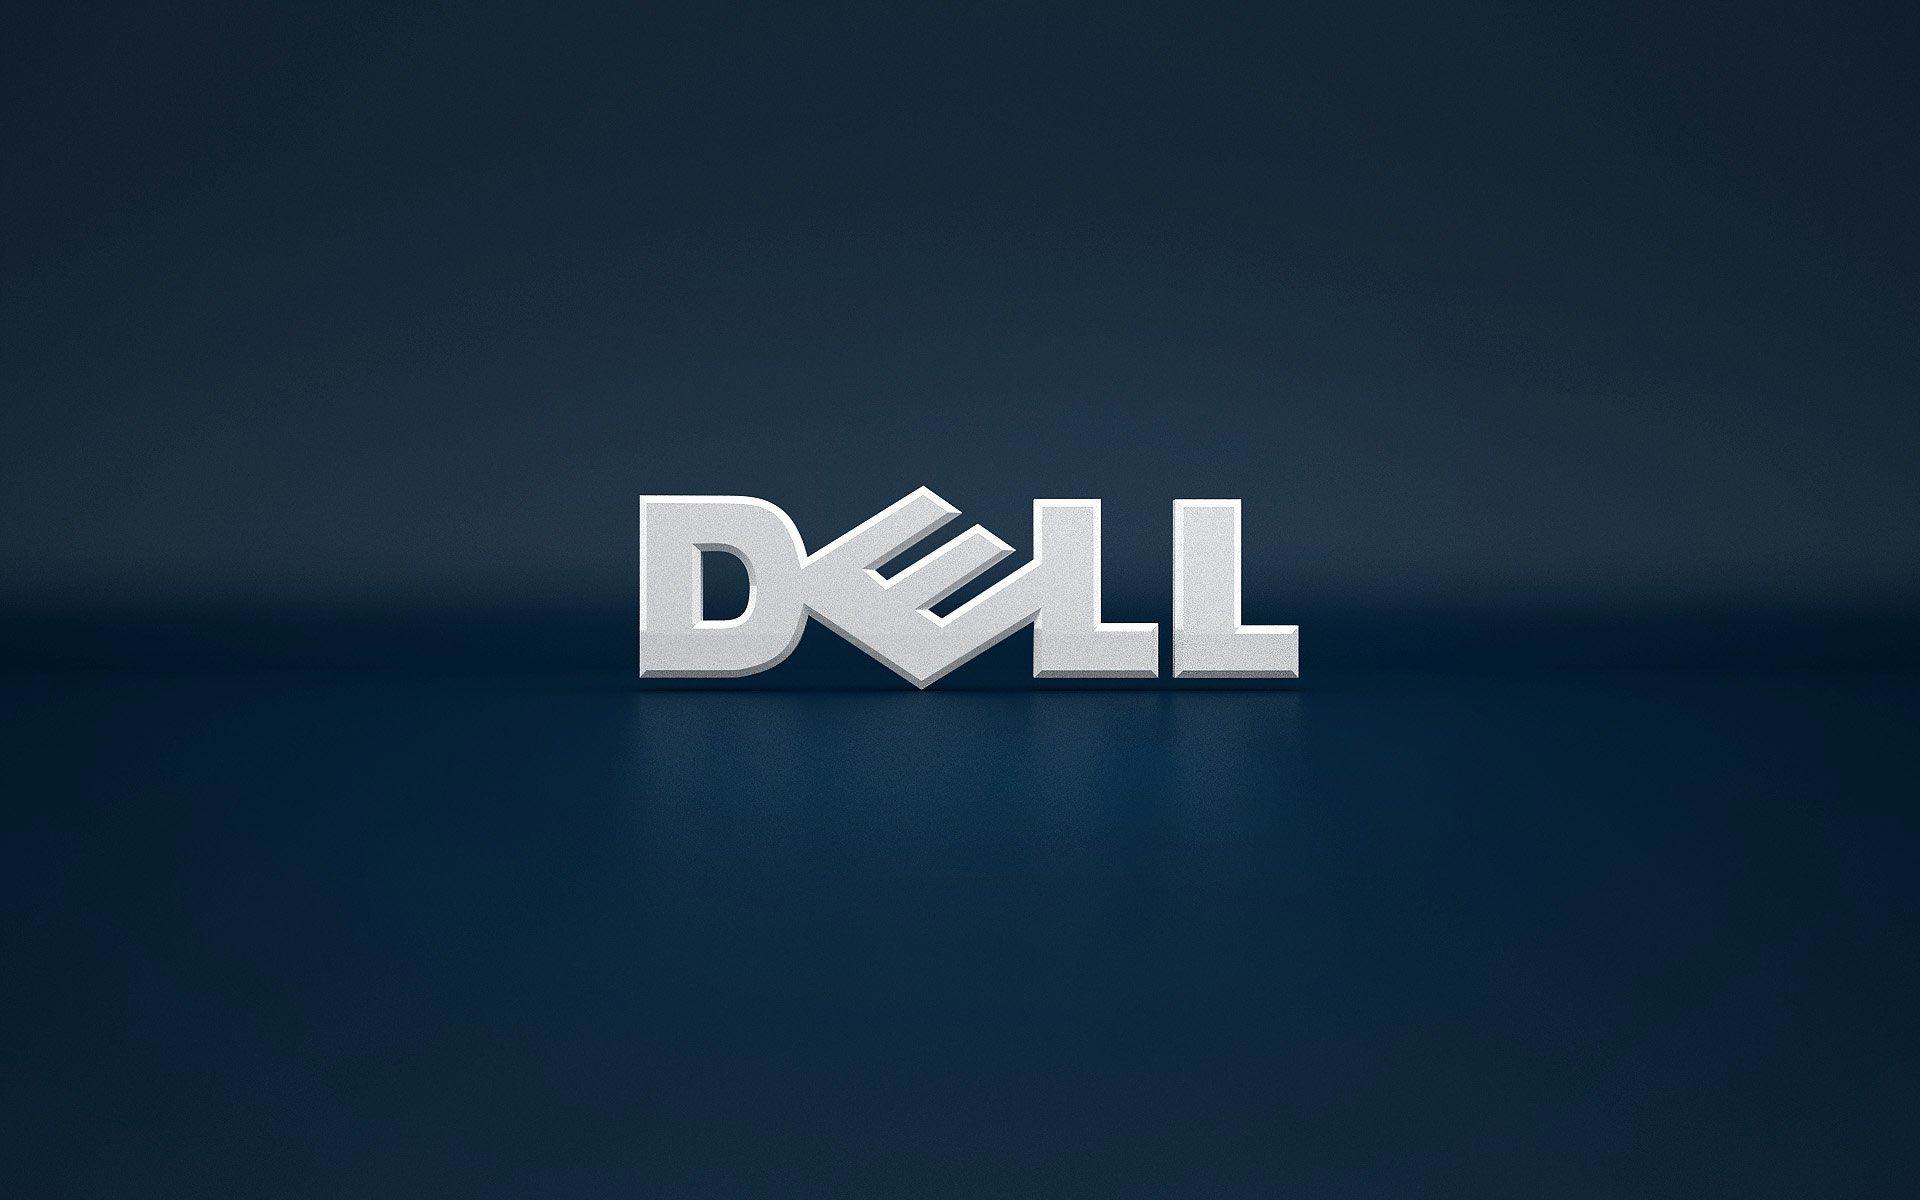 DELL logo HD background Wallpaper. Dell logo, HD